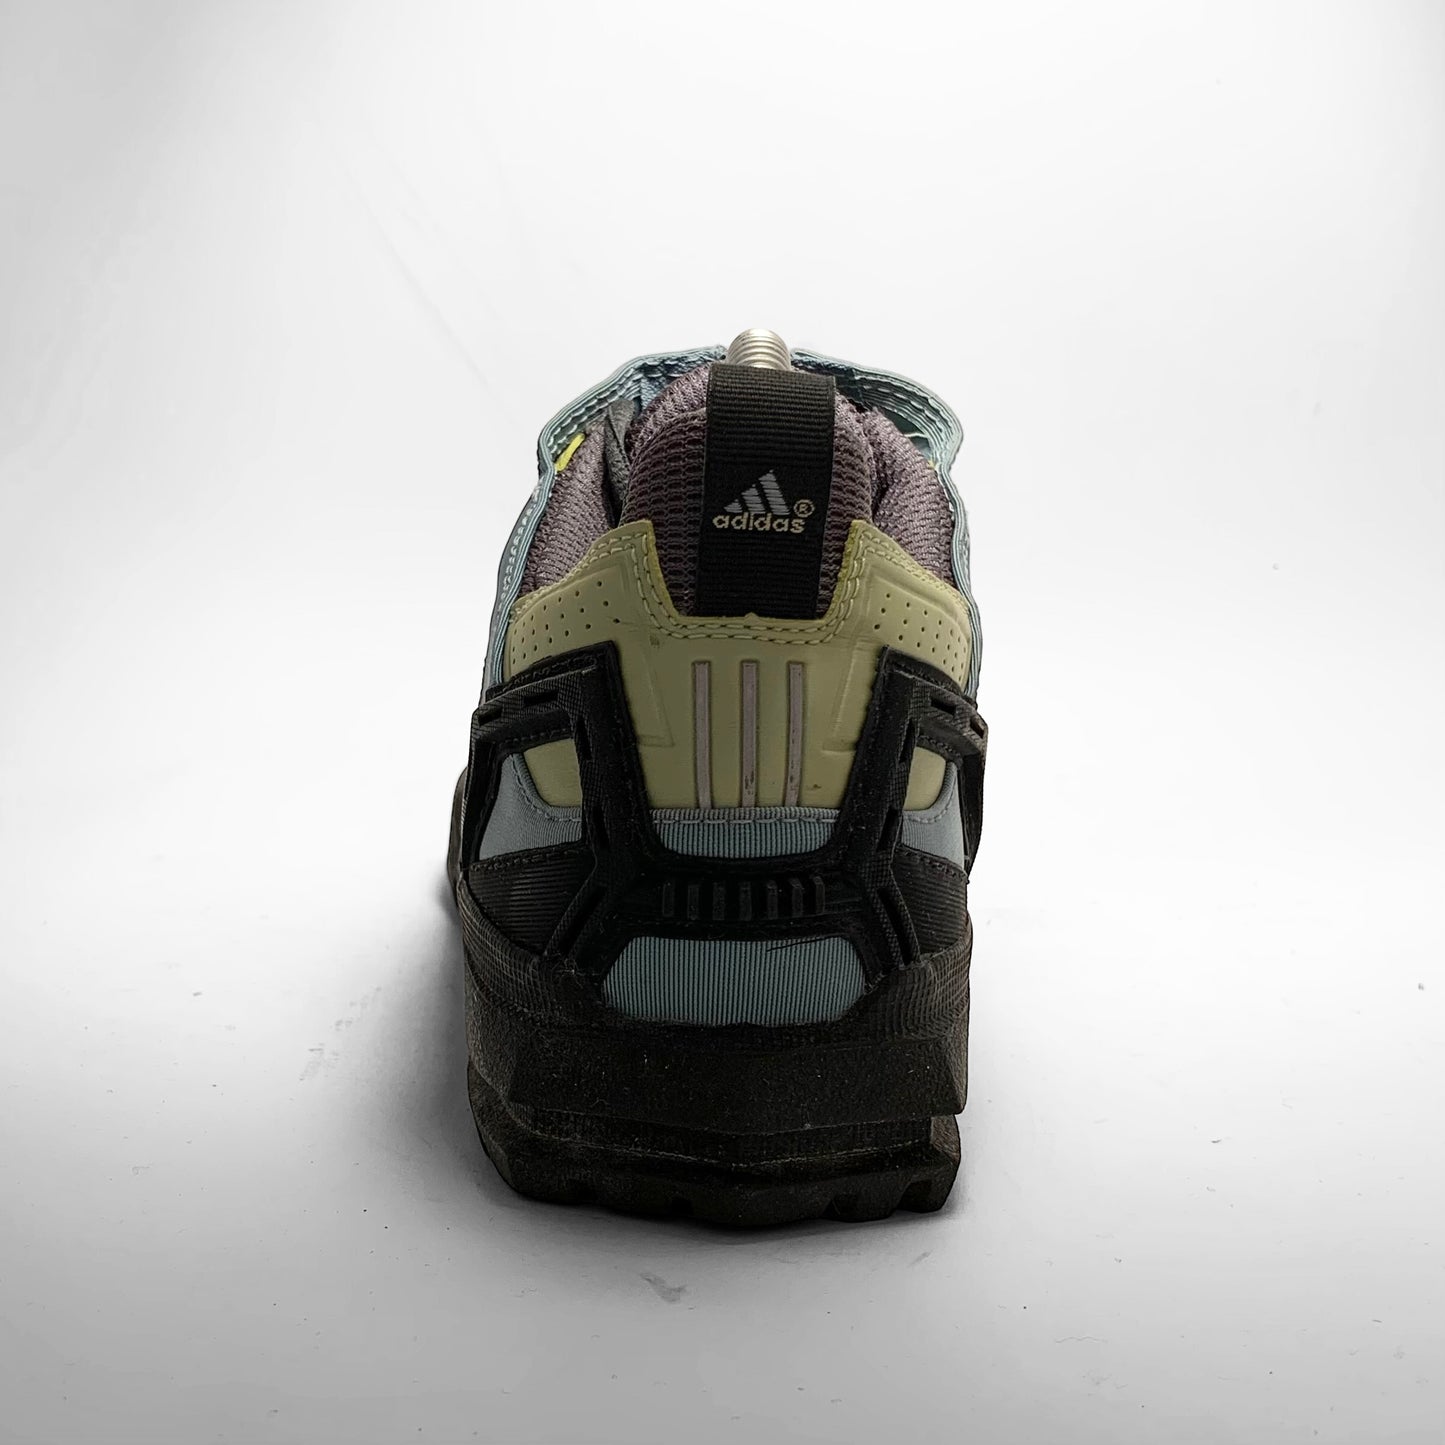 Adidas Pingora MTB (2001)